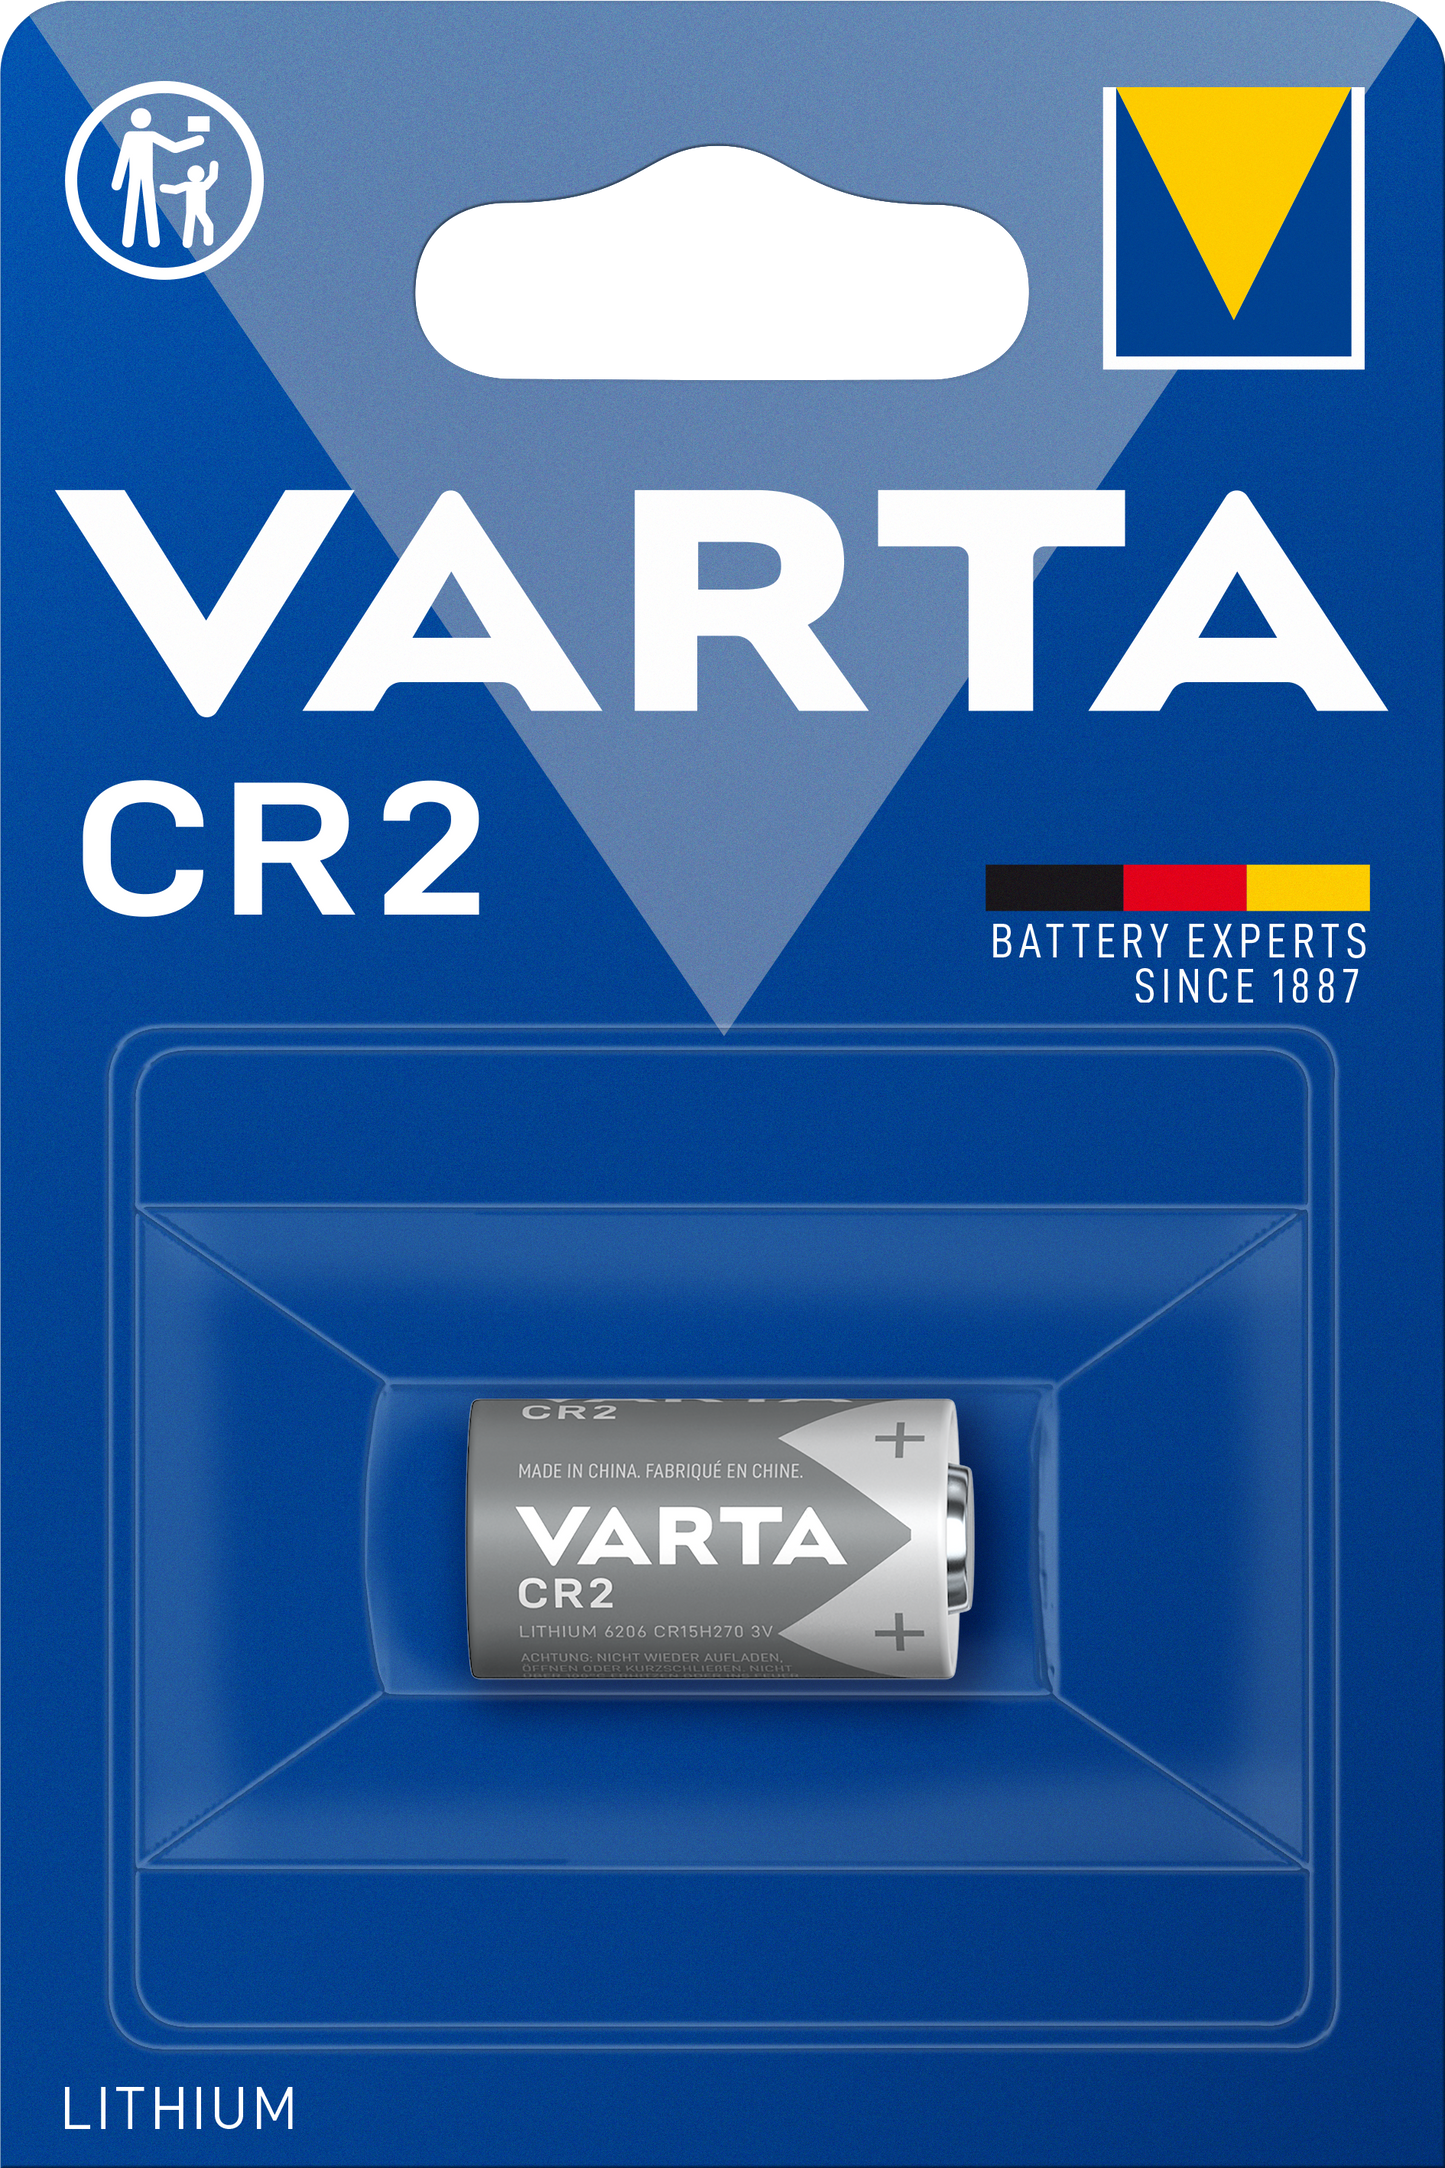 VARTA - Lithium - CR2